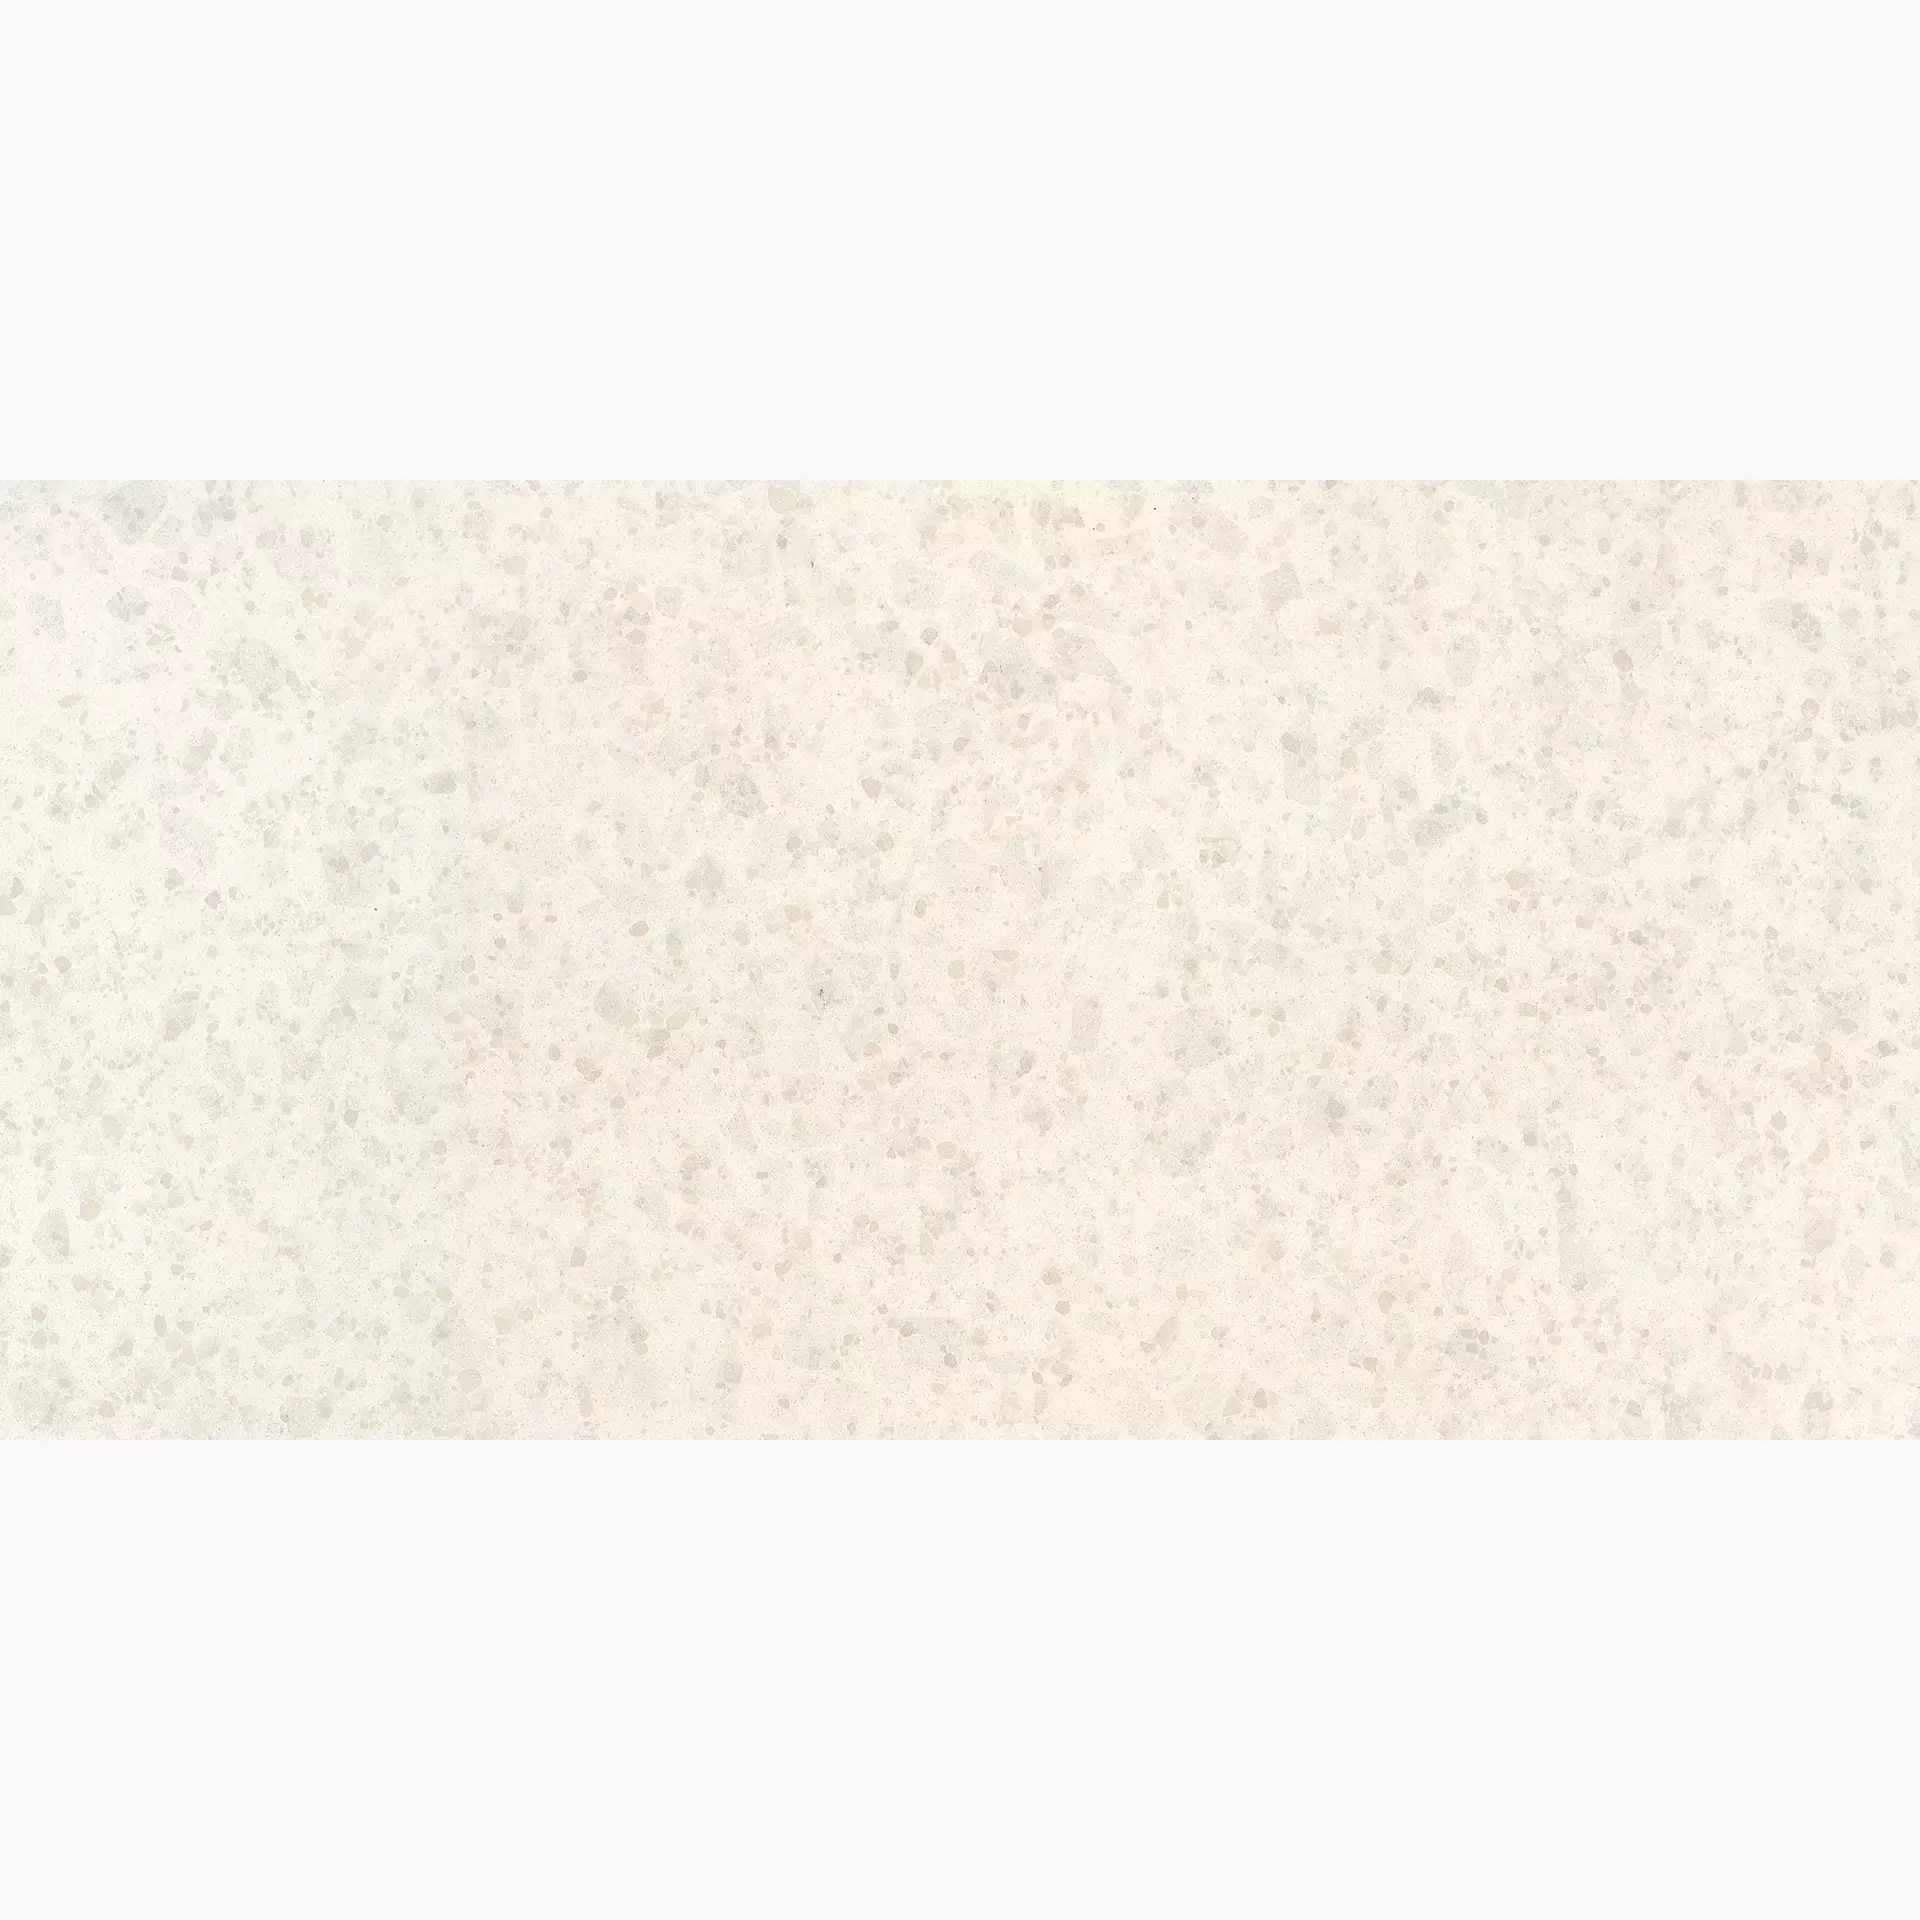 Gigacer Inclusioni Soave Bianco Perla Matt 12INCL60120BIAPERMAT 60x120cm 12mm